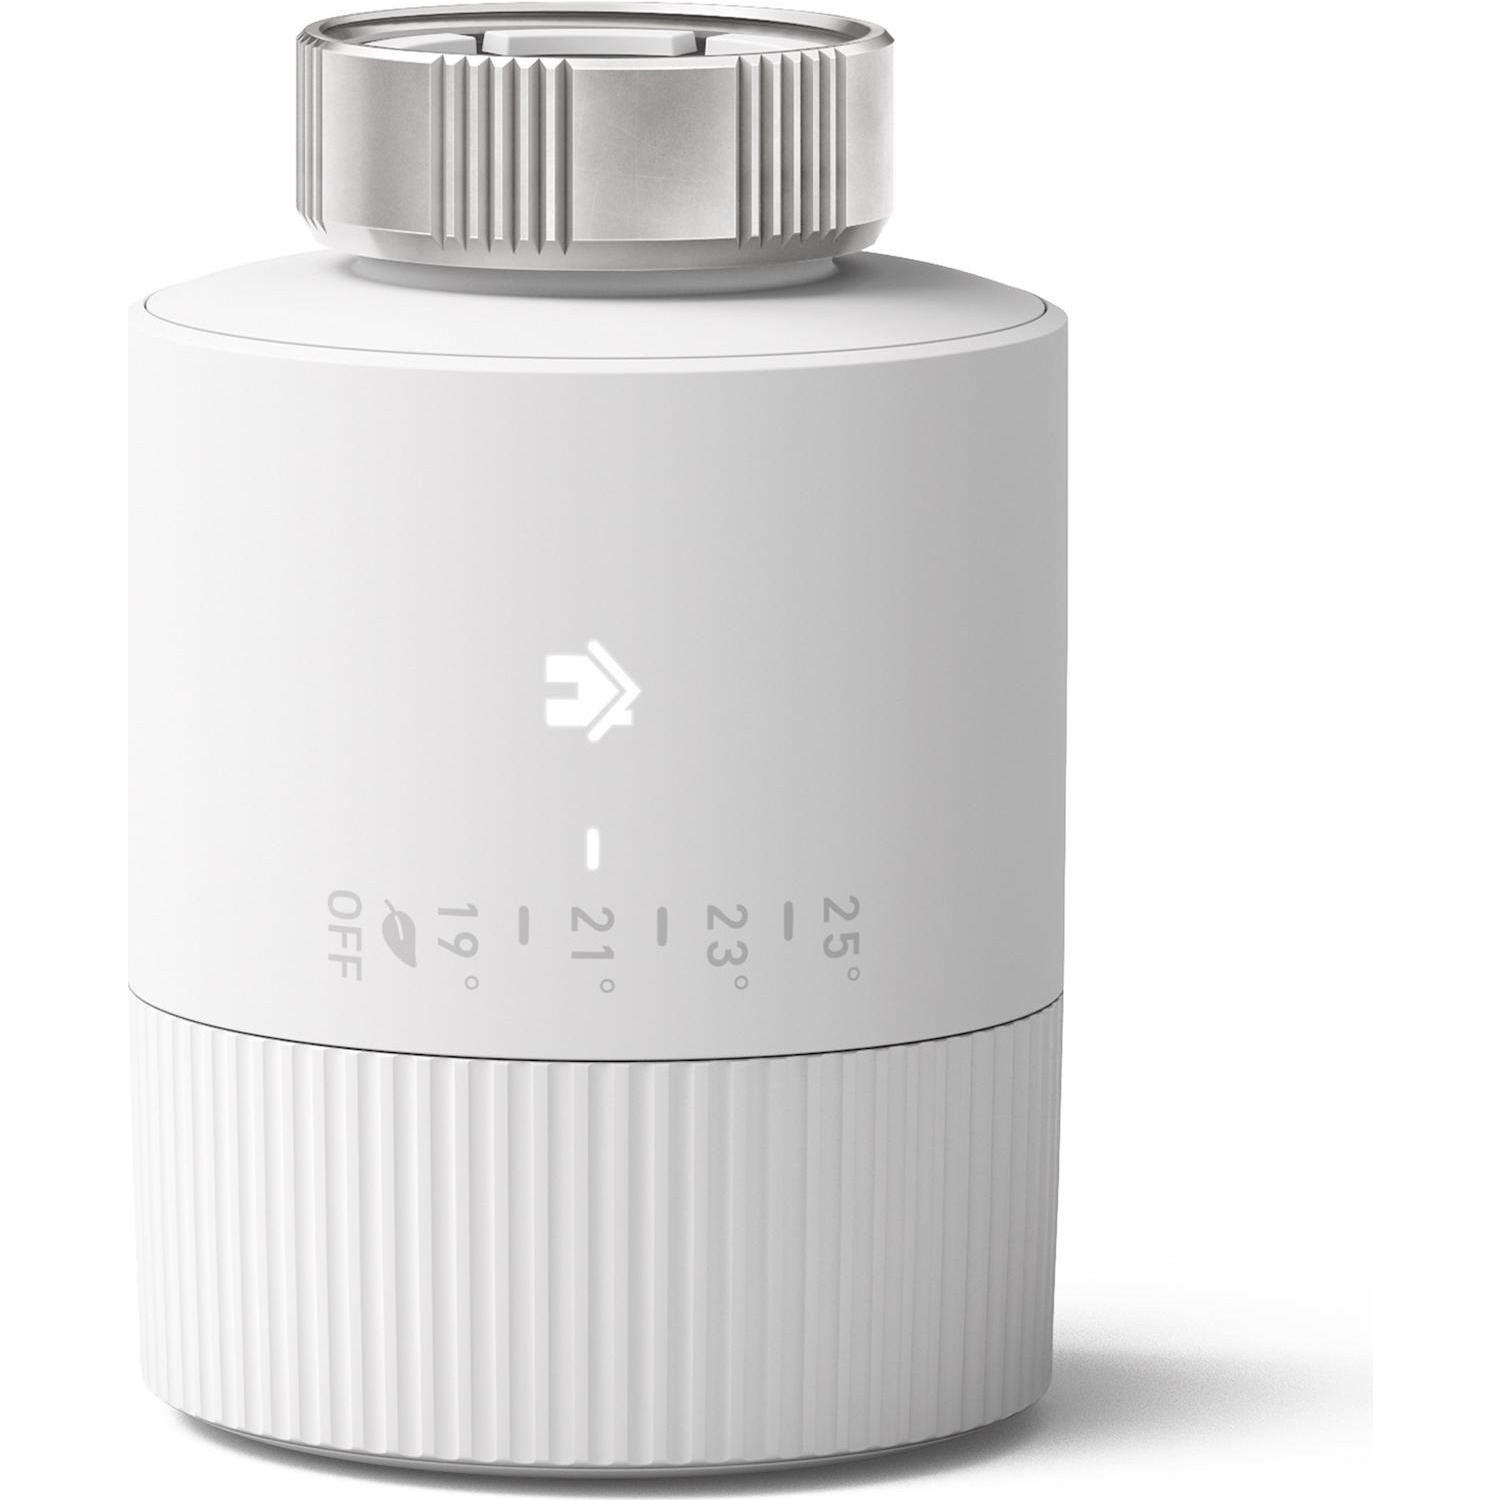 Immagine per Valvola termostatica Tado smart basic x1 bianca da DIMOStore